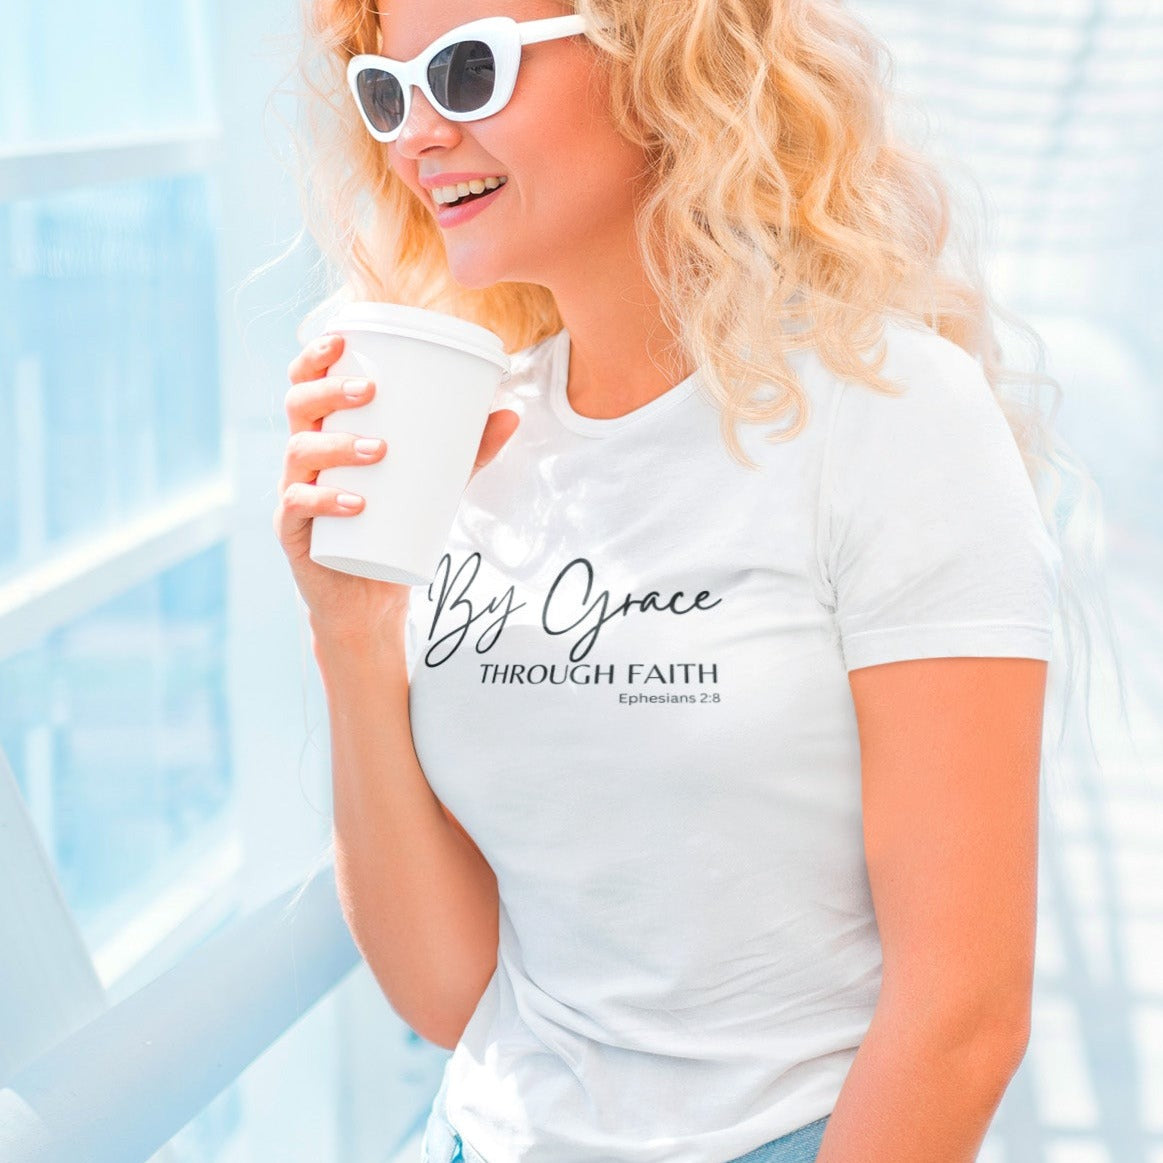 by-grace-through-faith-ephesians-2-8-white-t-shirt-womens-faith-inspiring-mockup-featuring-a-blonde-woman-with-sunglasses